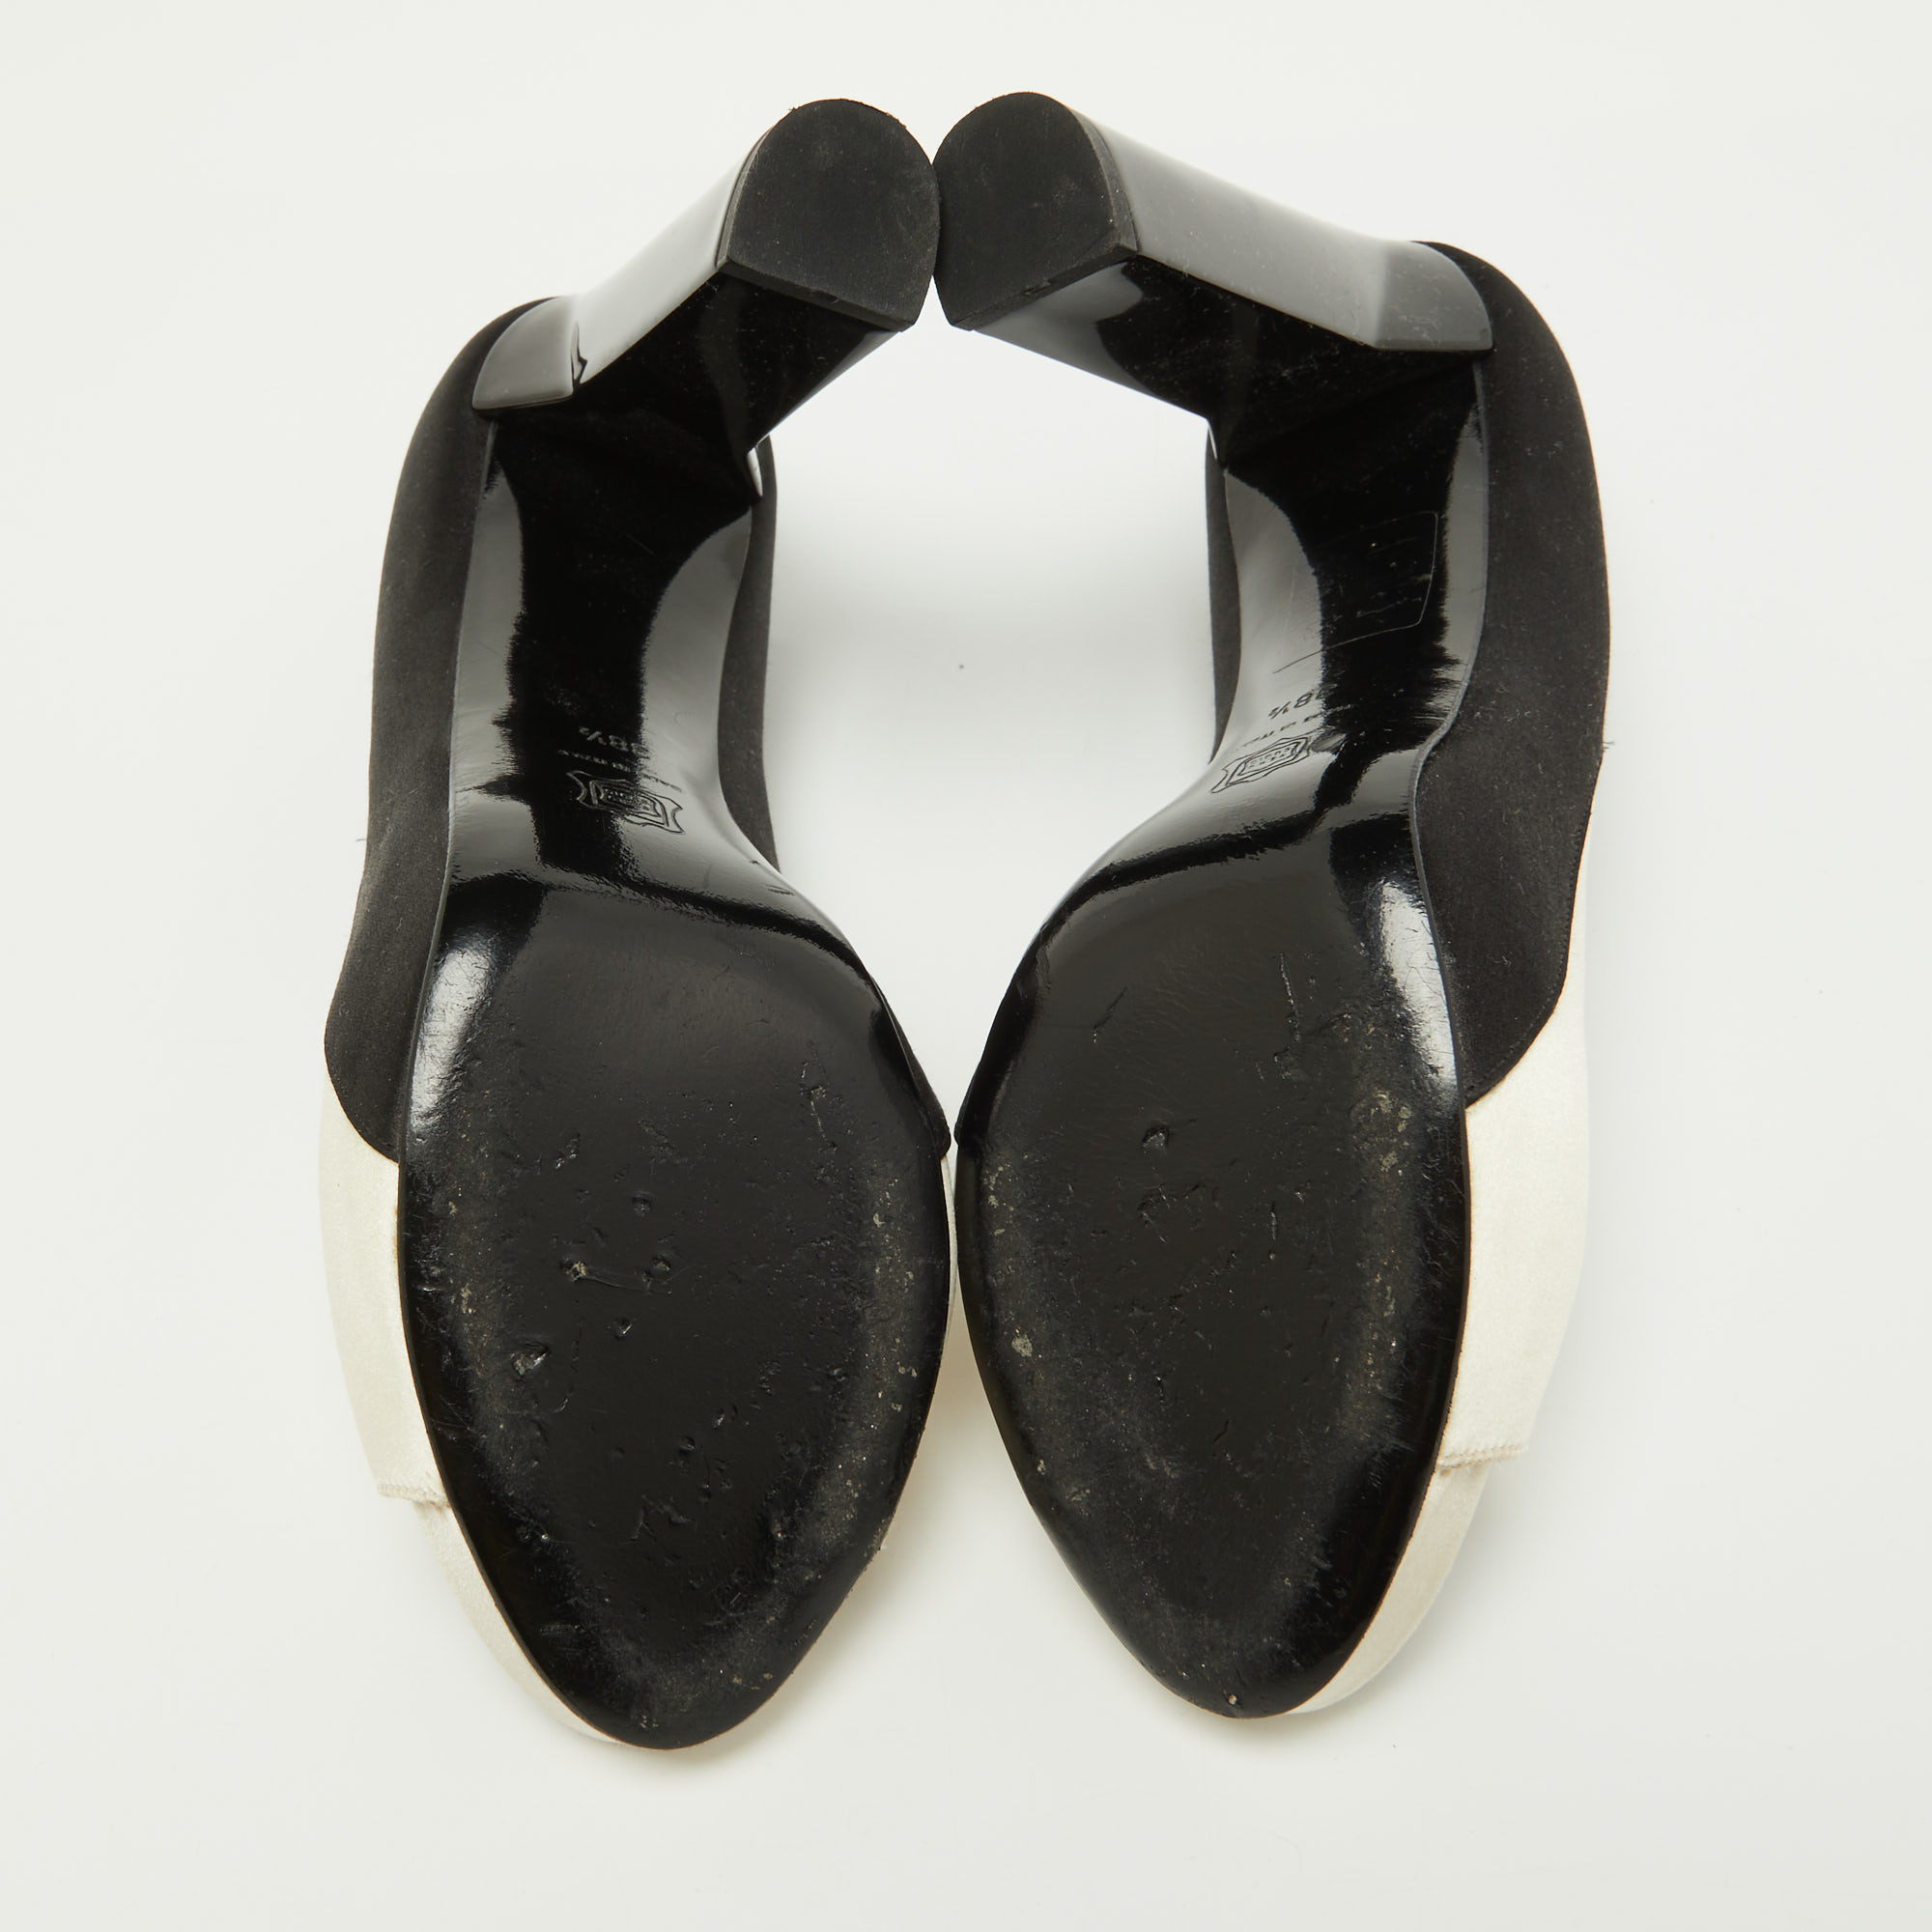 Pierre Hardy White/Black Satin Peep Toe Pumps Size 38.5